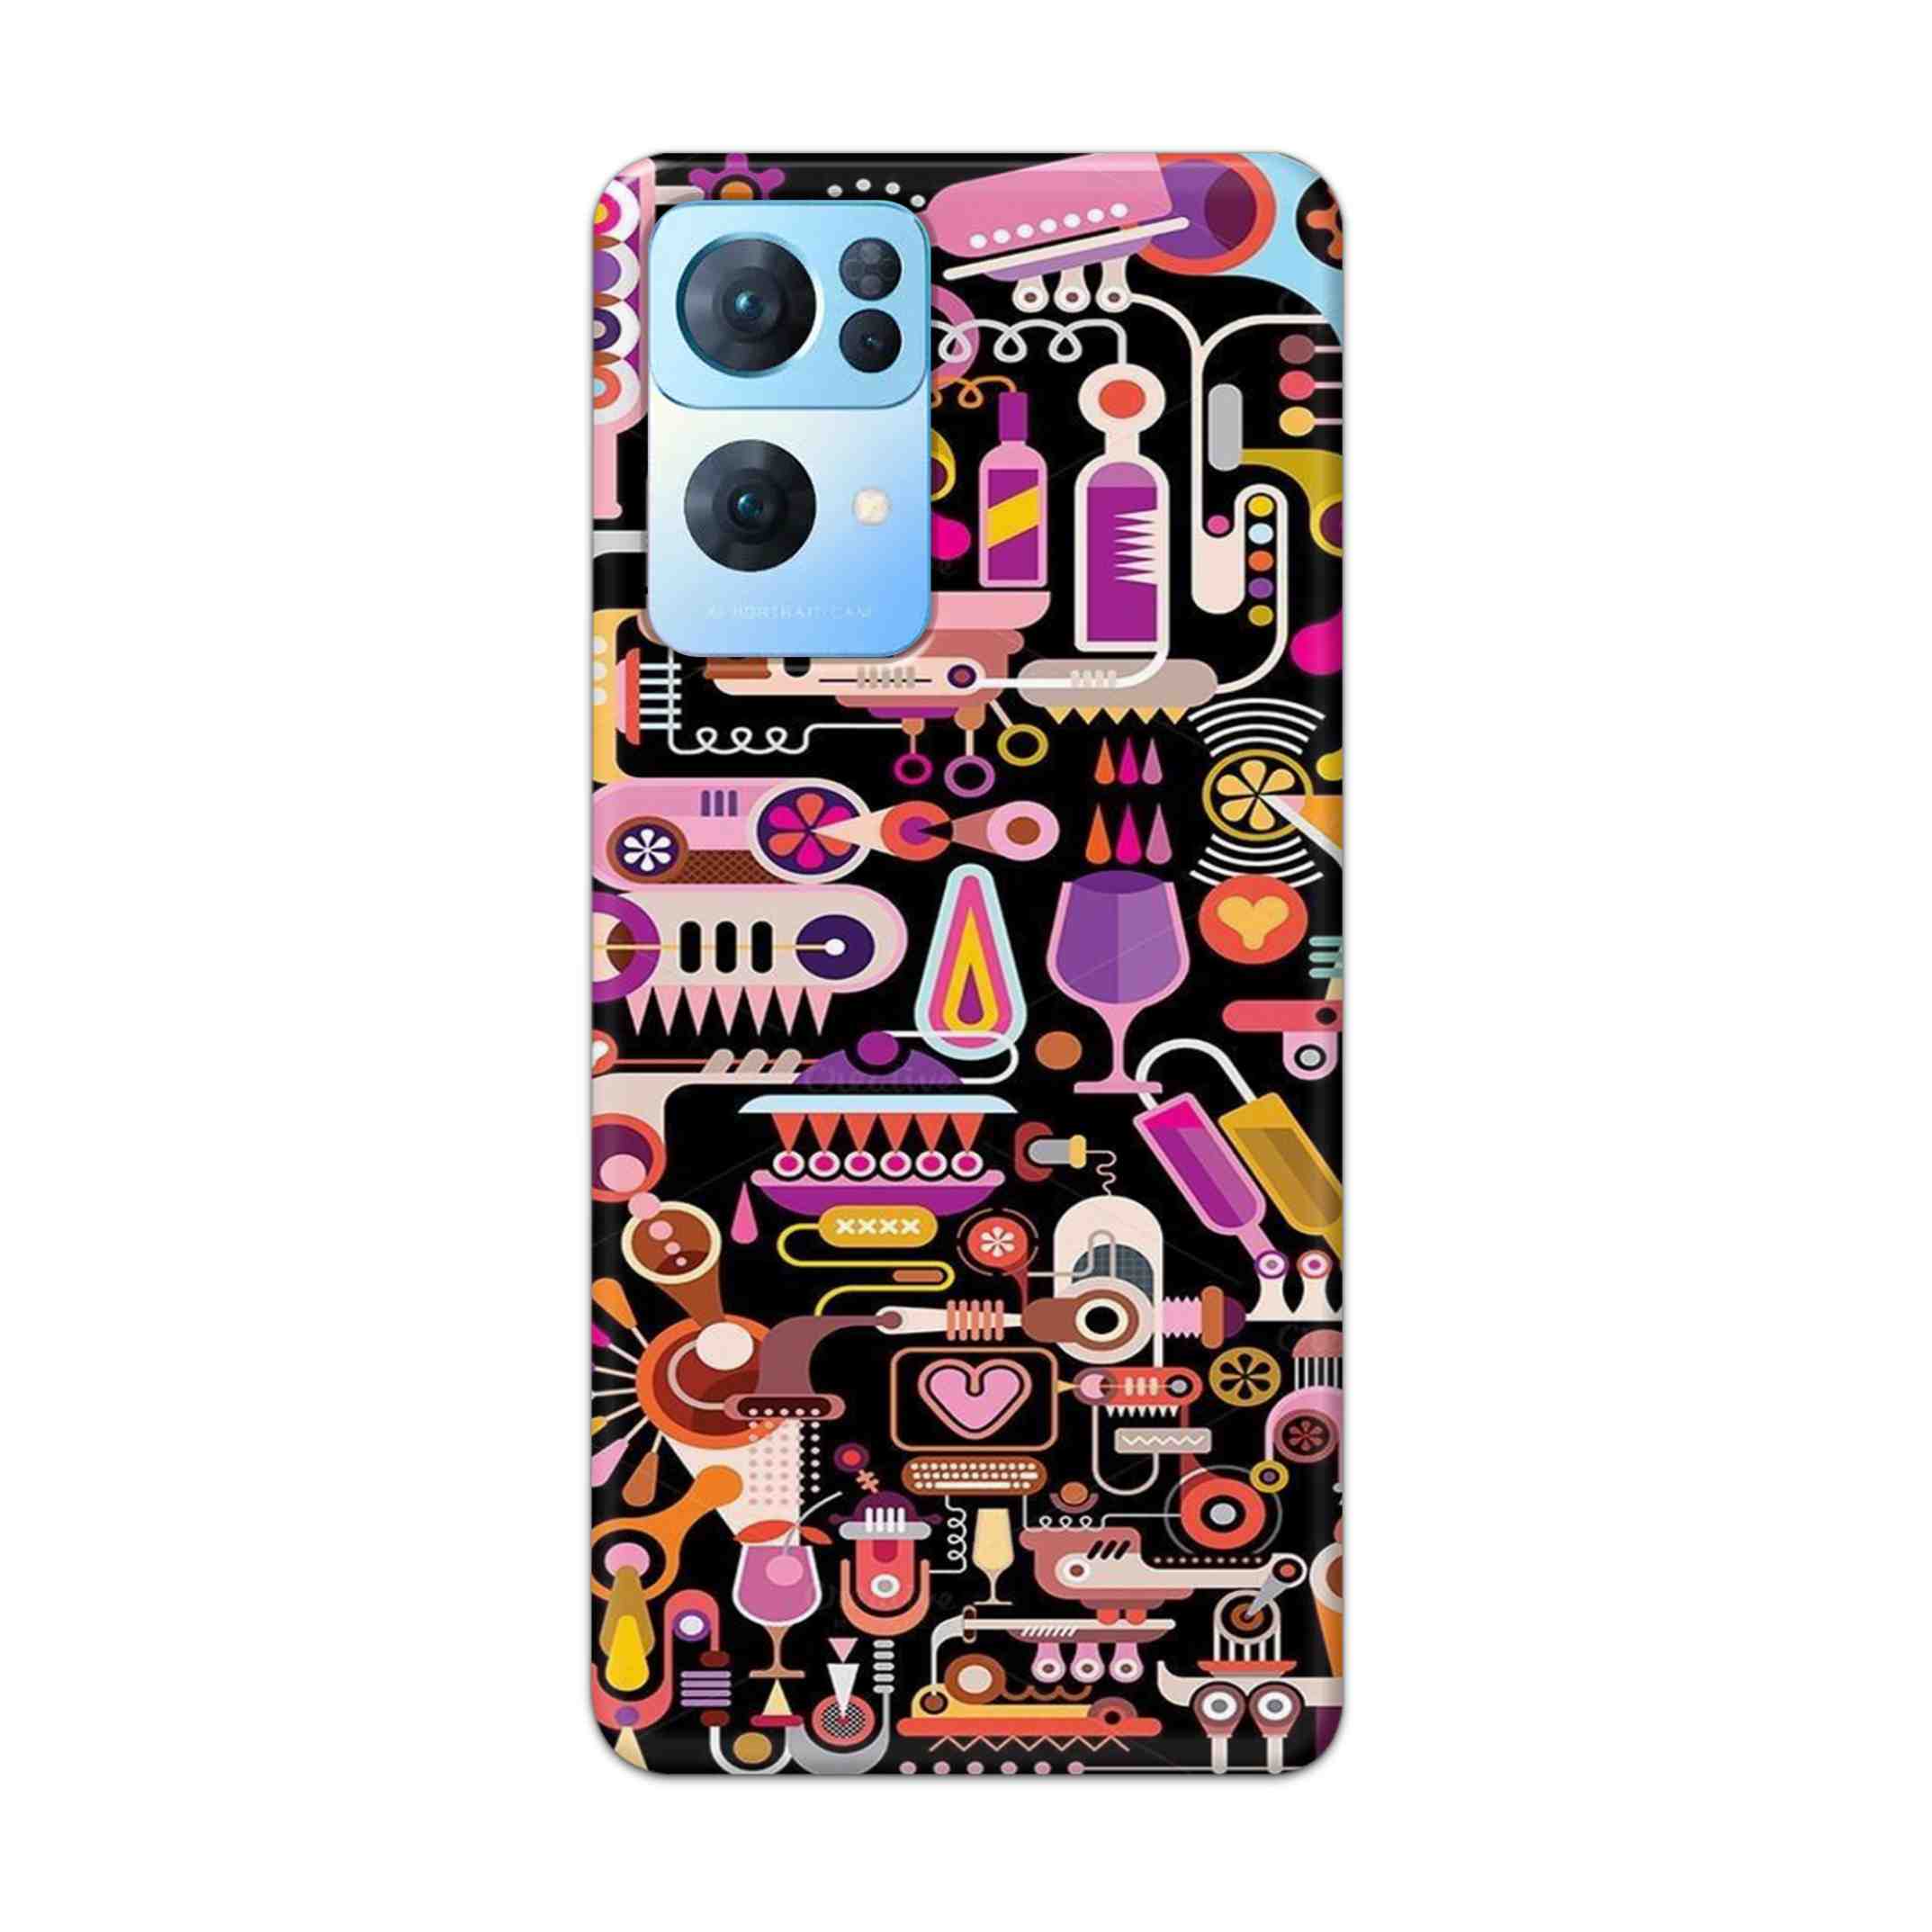 Buy Lab Art Hard Back Mobile Phone Case Cover For Oppo Reno 7 Pro Online